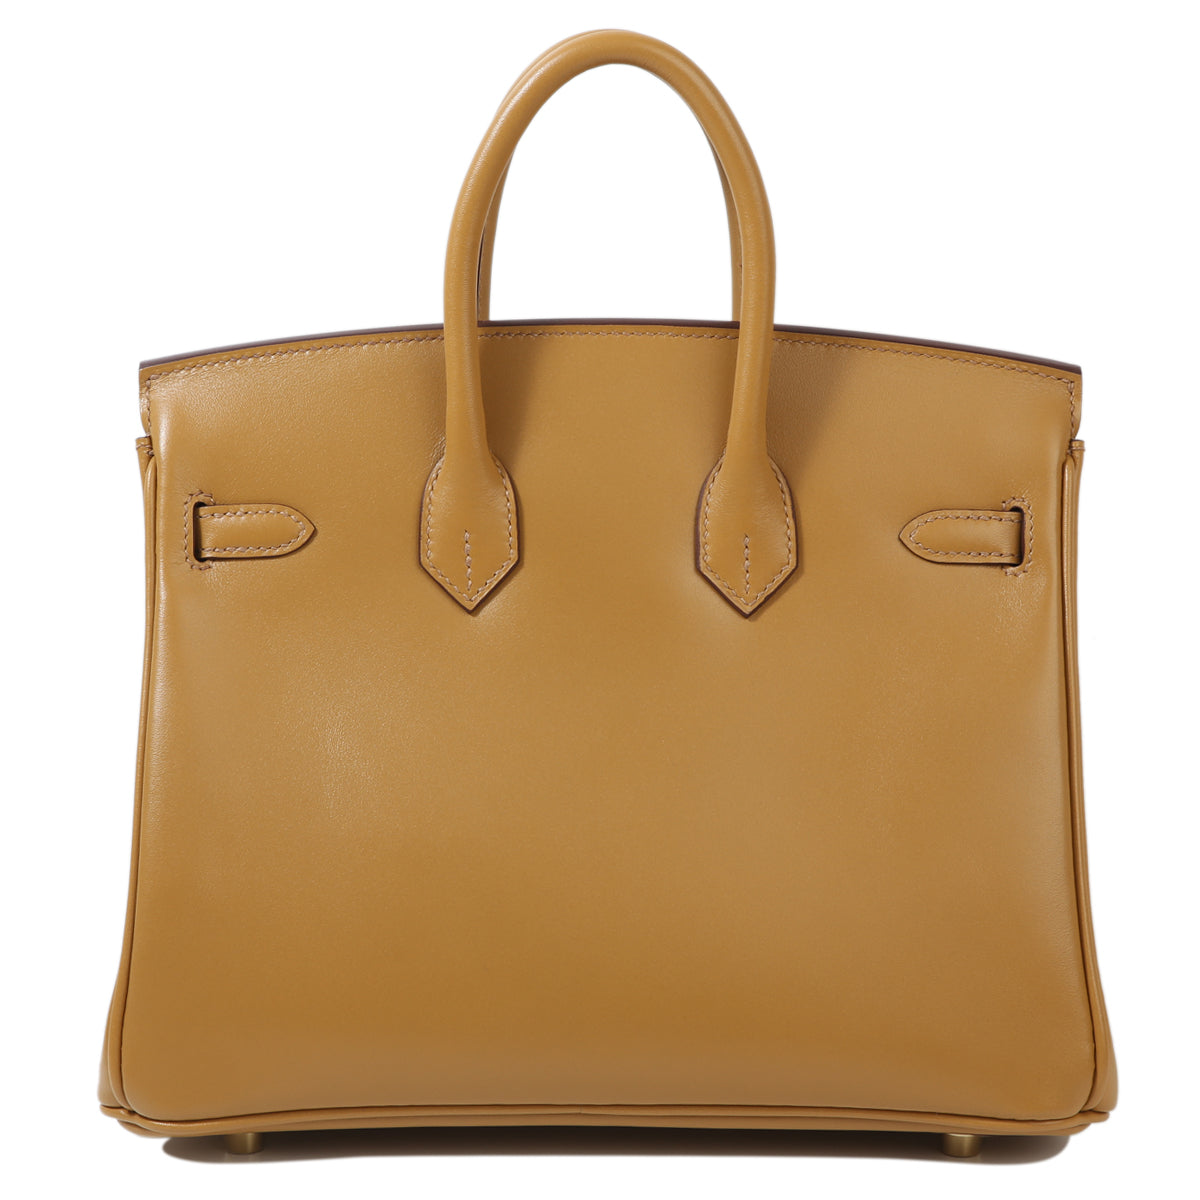 Hermes Birkin 25 Handbag Bag Tote